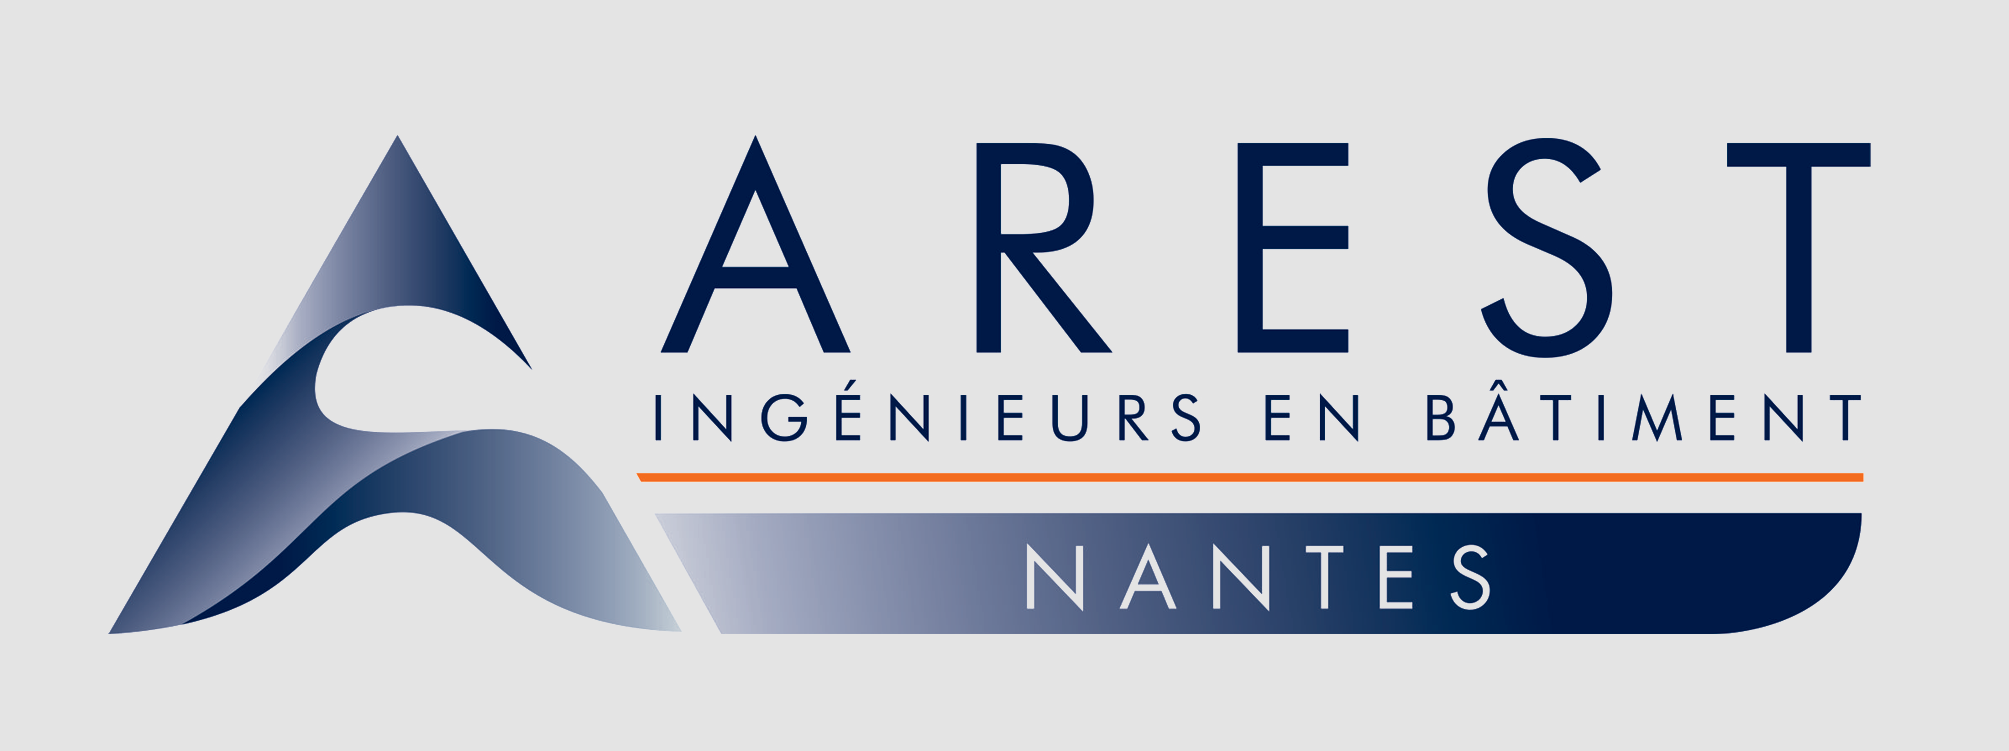 AREST Nantes logo 2